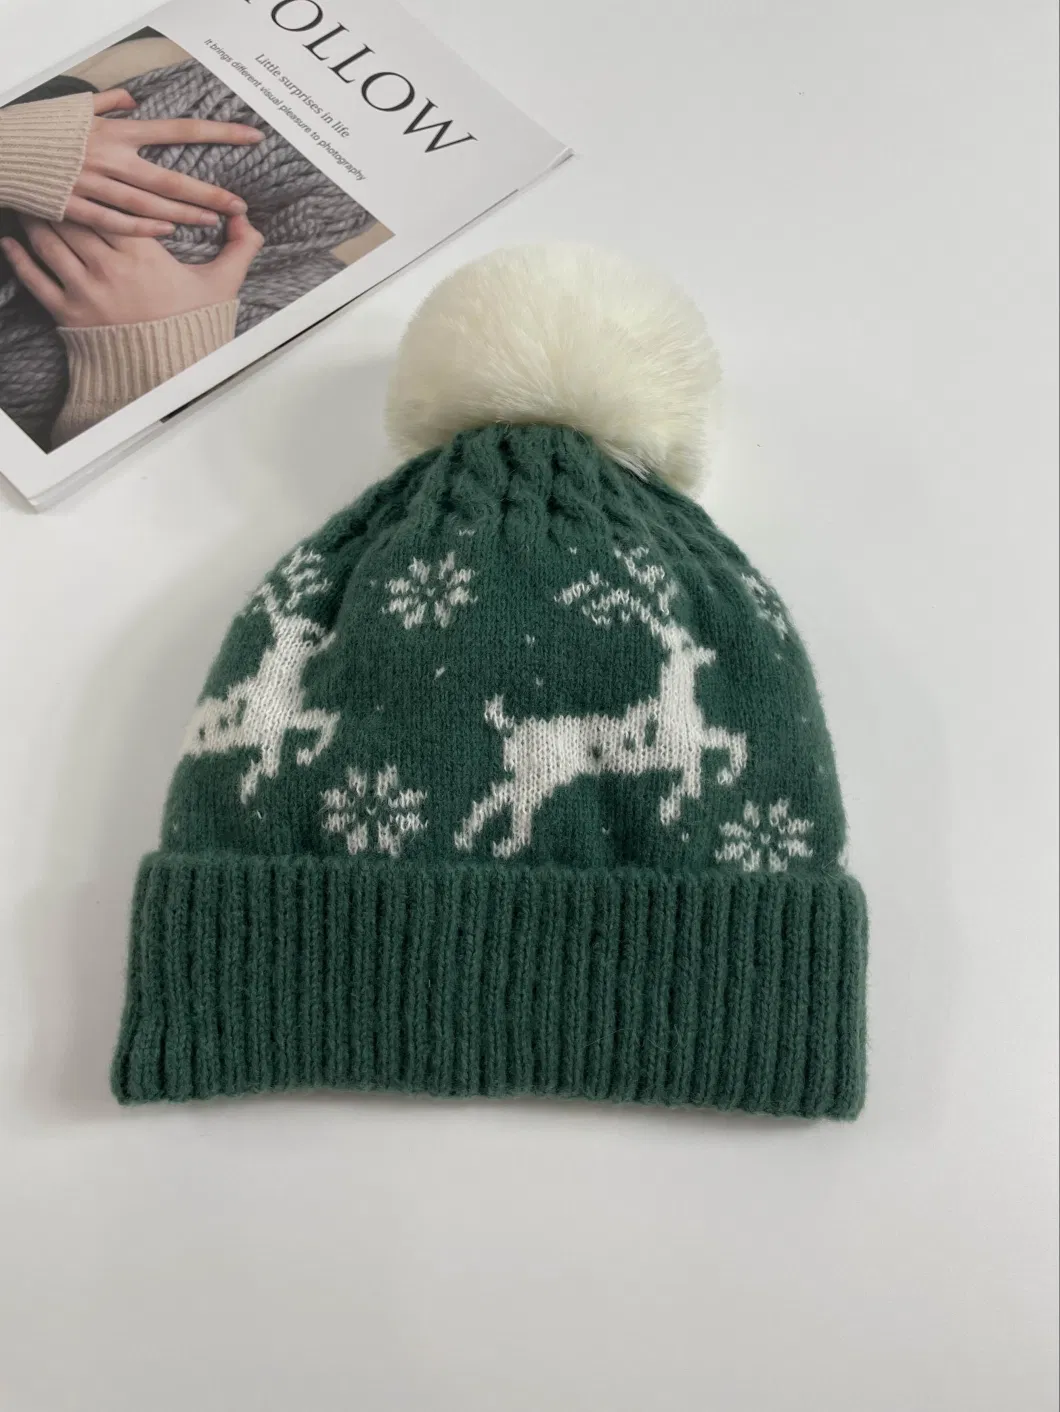 Wholesale Christmas Festival Winter Deer Print Warm Scarf Hat Gloves Three-Piece Set